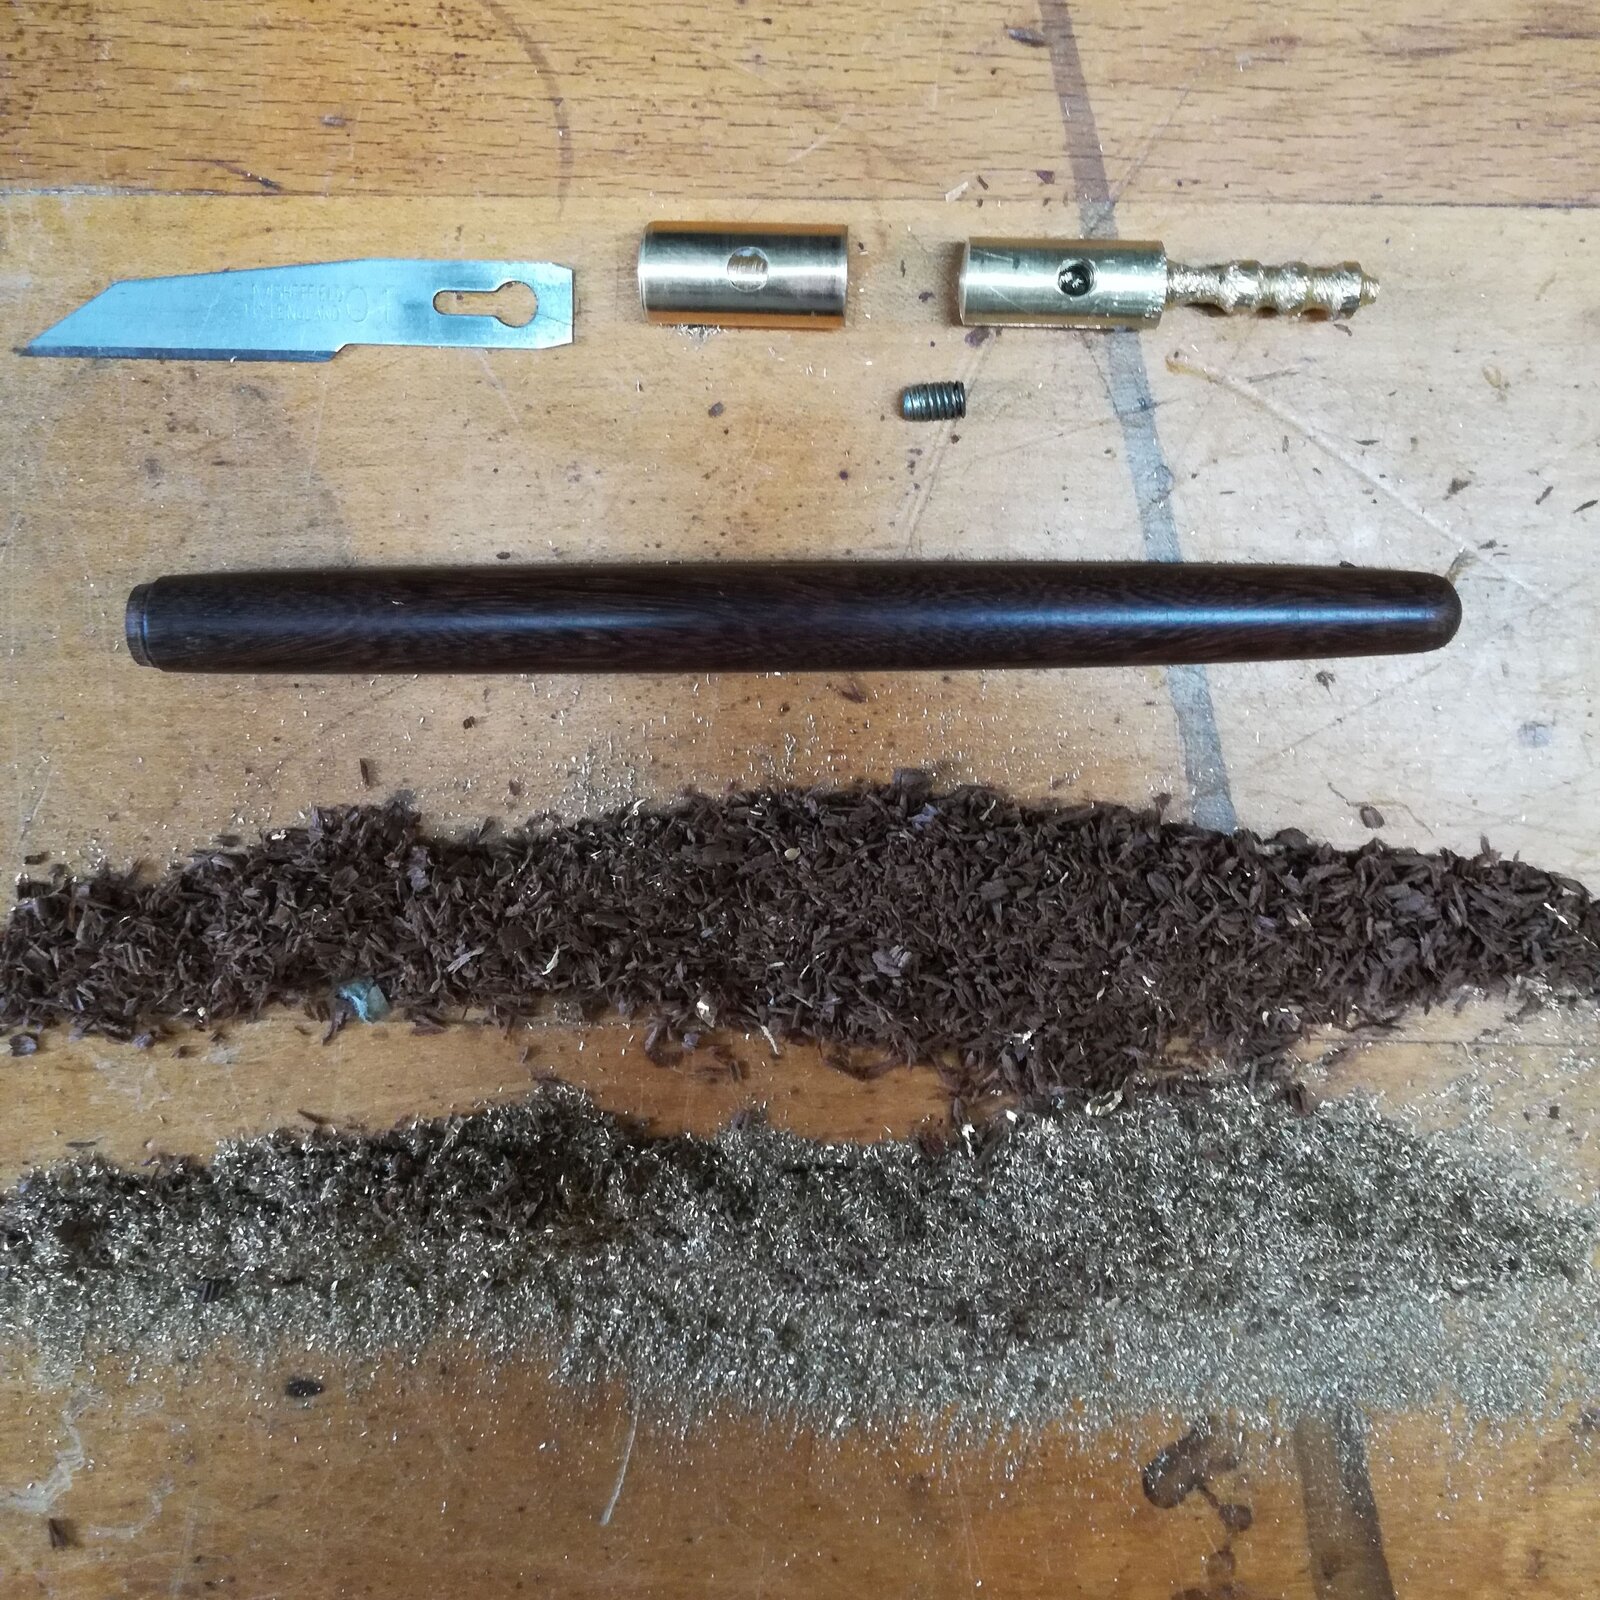 Mr. Pen- Craft Knife Set, 13 Piece, Exacto and 23 similar items